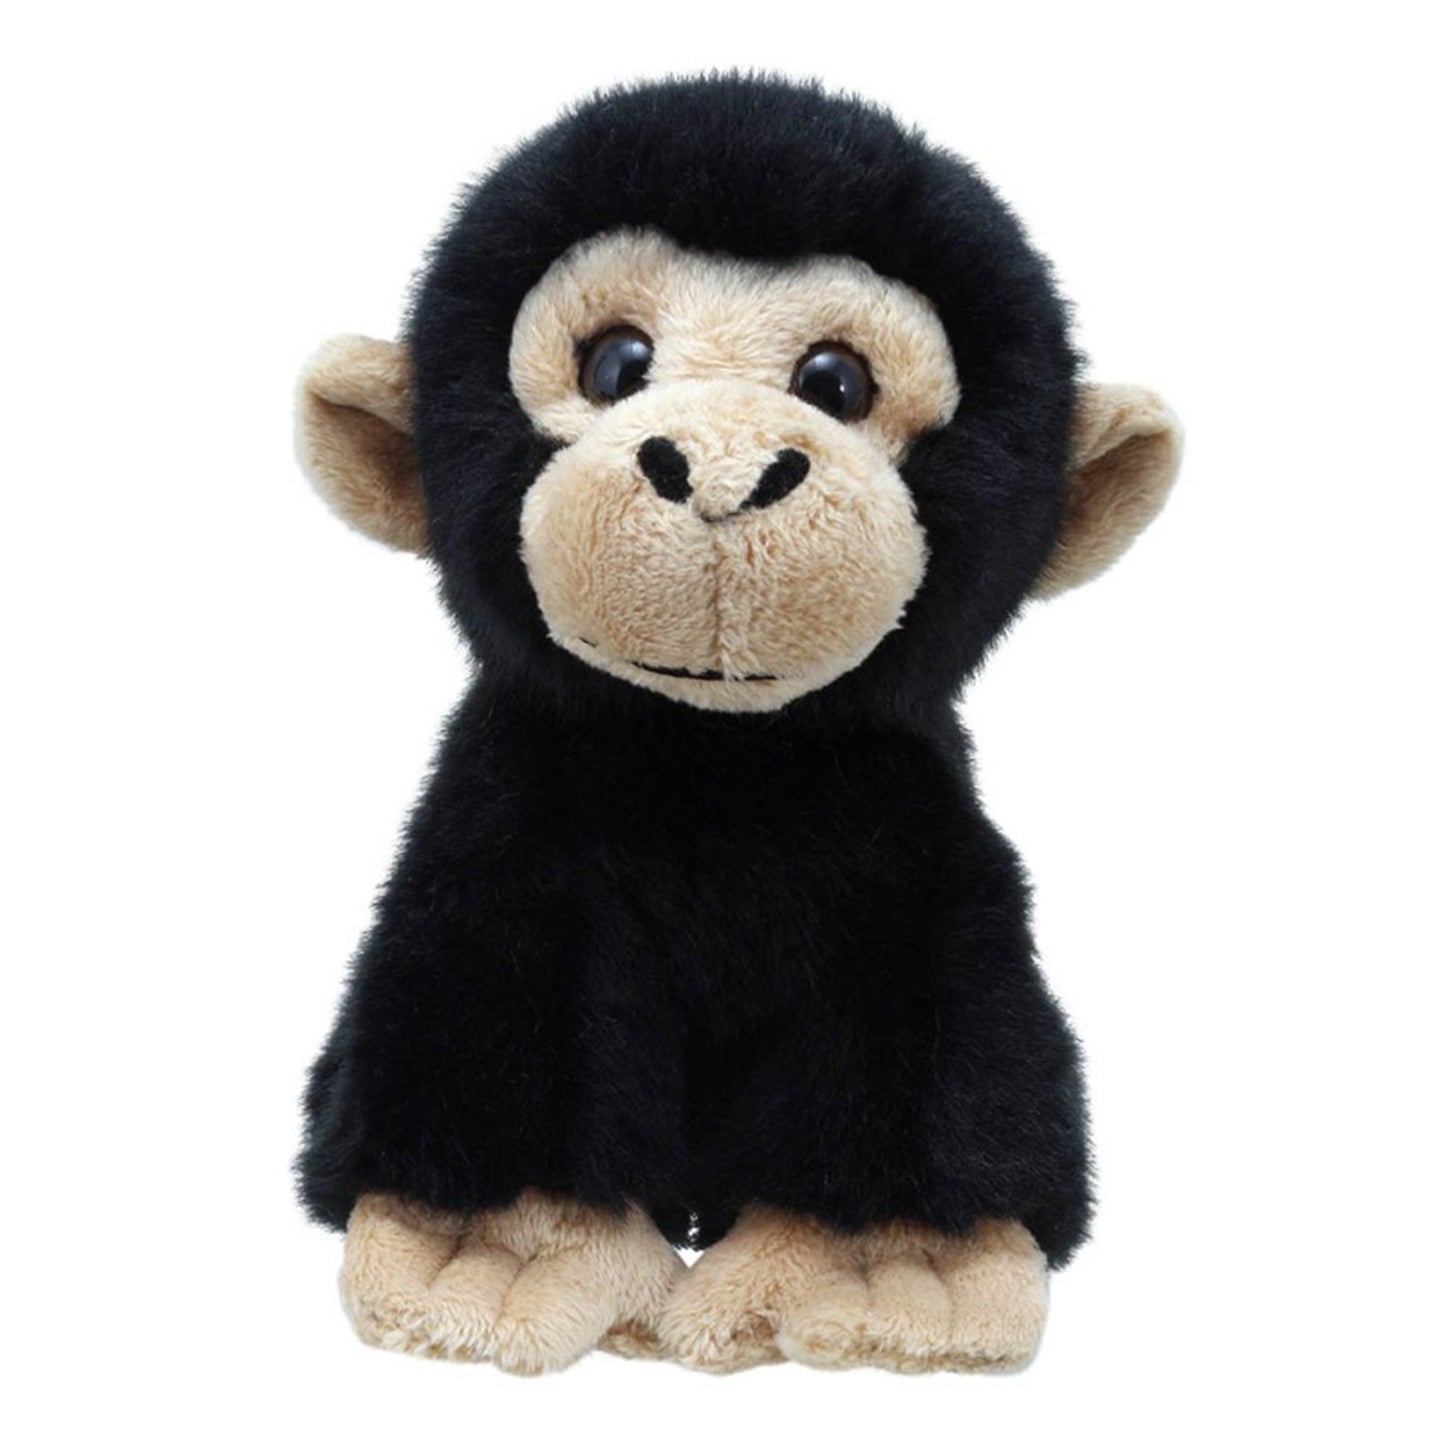 Wilberry Mini's Chimpanzee - Wilberry Toys - The Forgotten Toy Shop